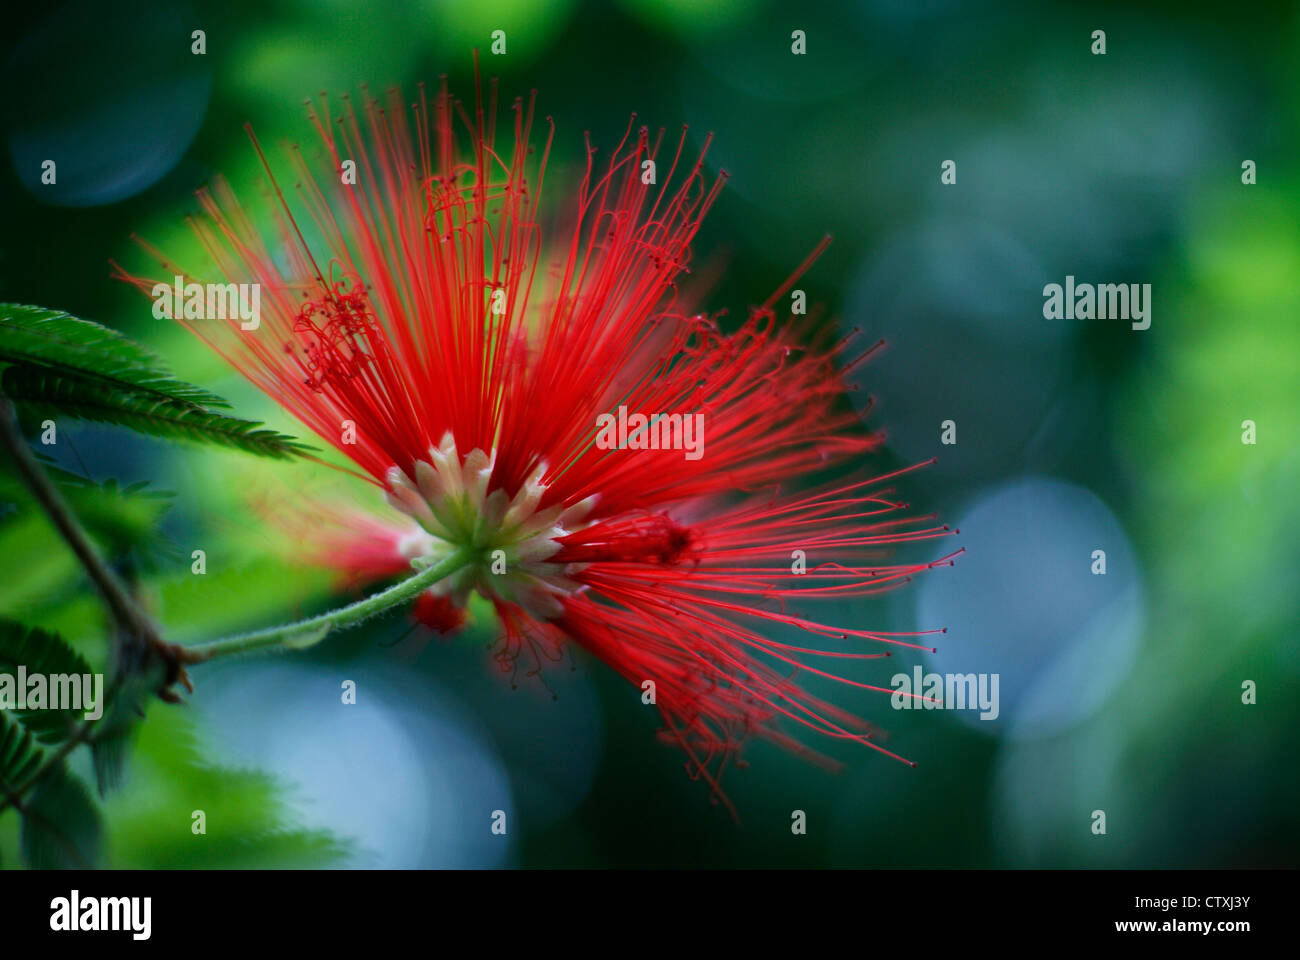 Flowering Mexican Flame Bush - Calliandra tweedii with artistic bokeh background Stock Photo